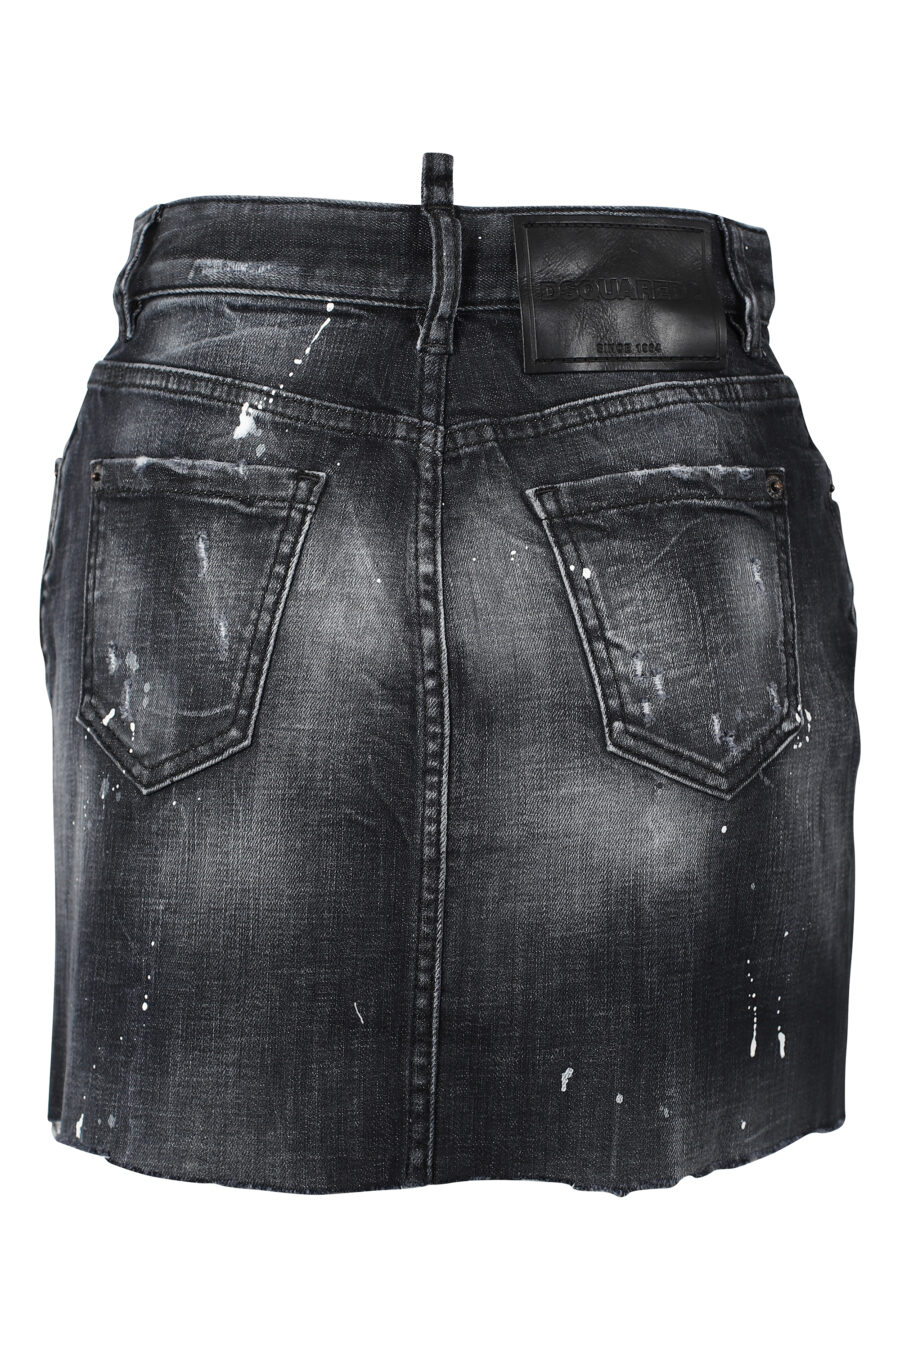 Falda vaquera "raw cut mini skirt" negra con semiabertura - IMG 9797